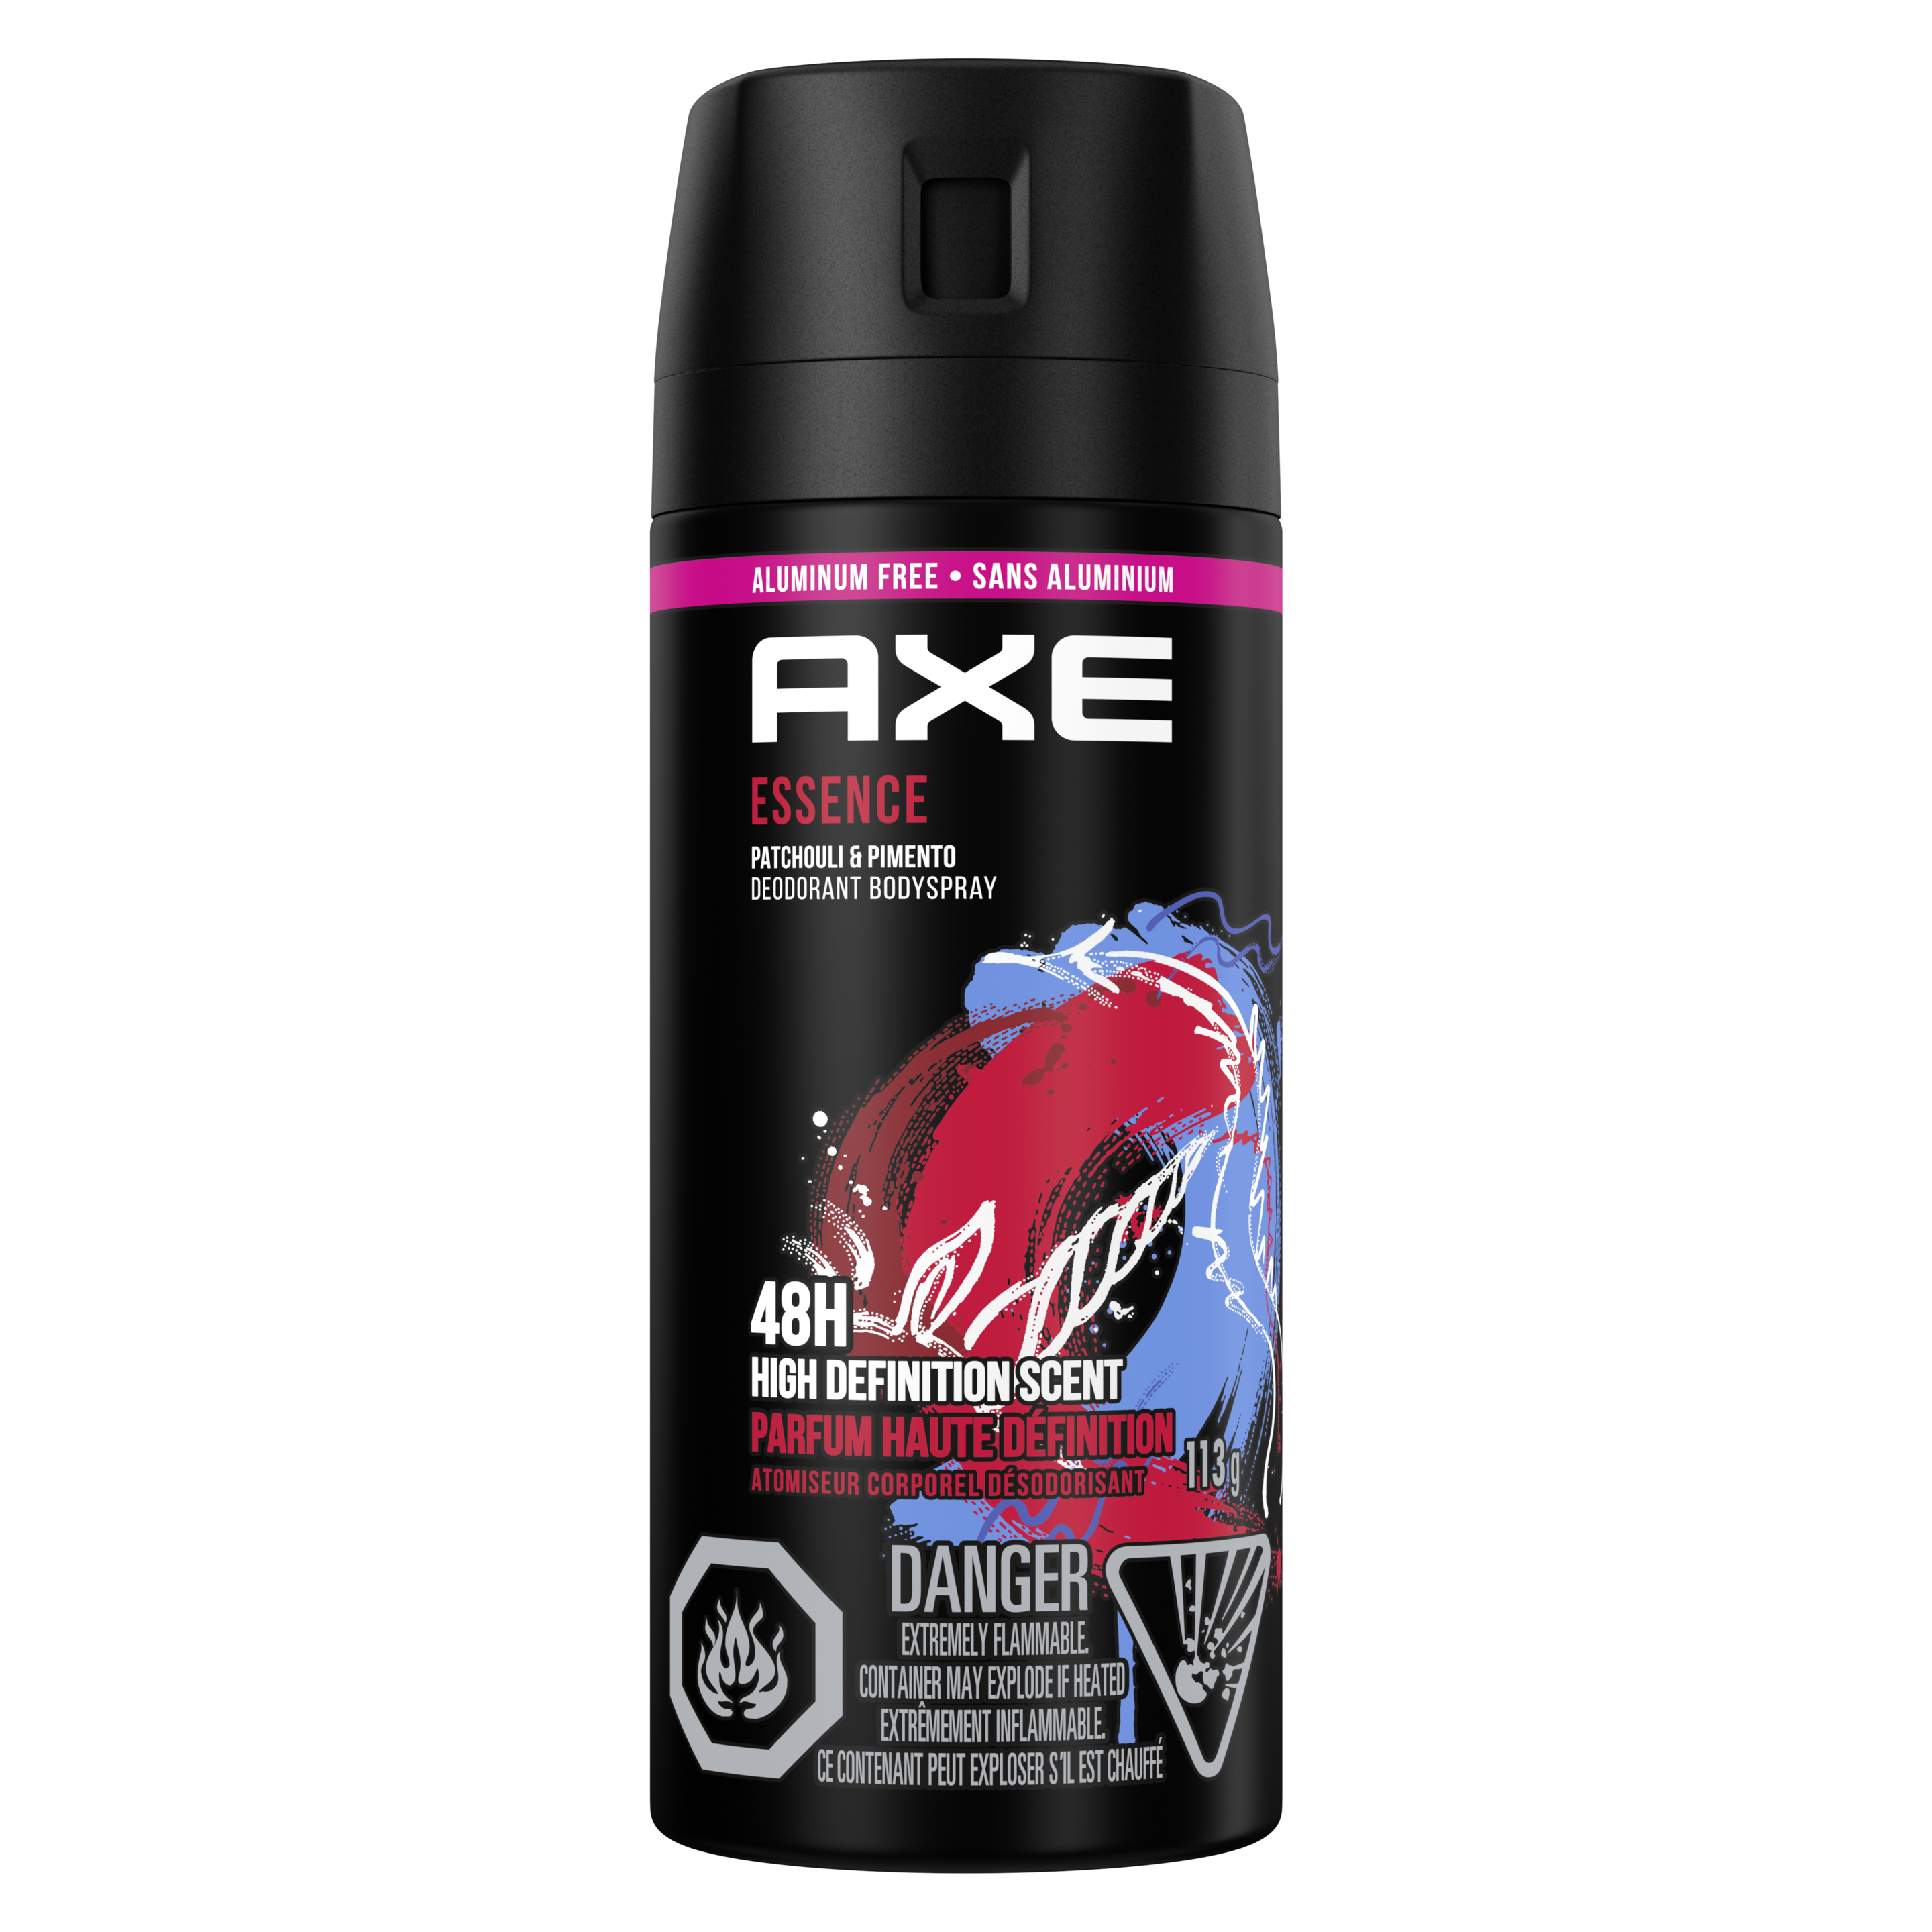 AXE Essence Deodorant Body Spray